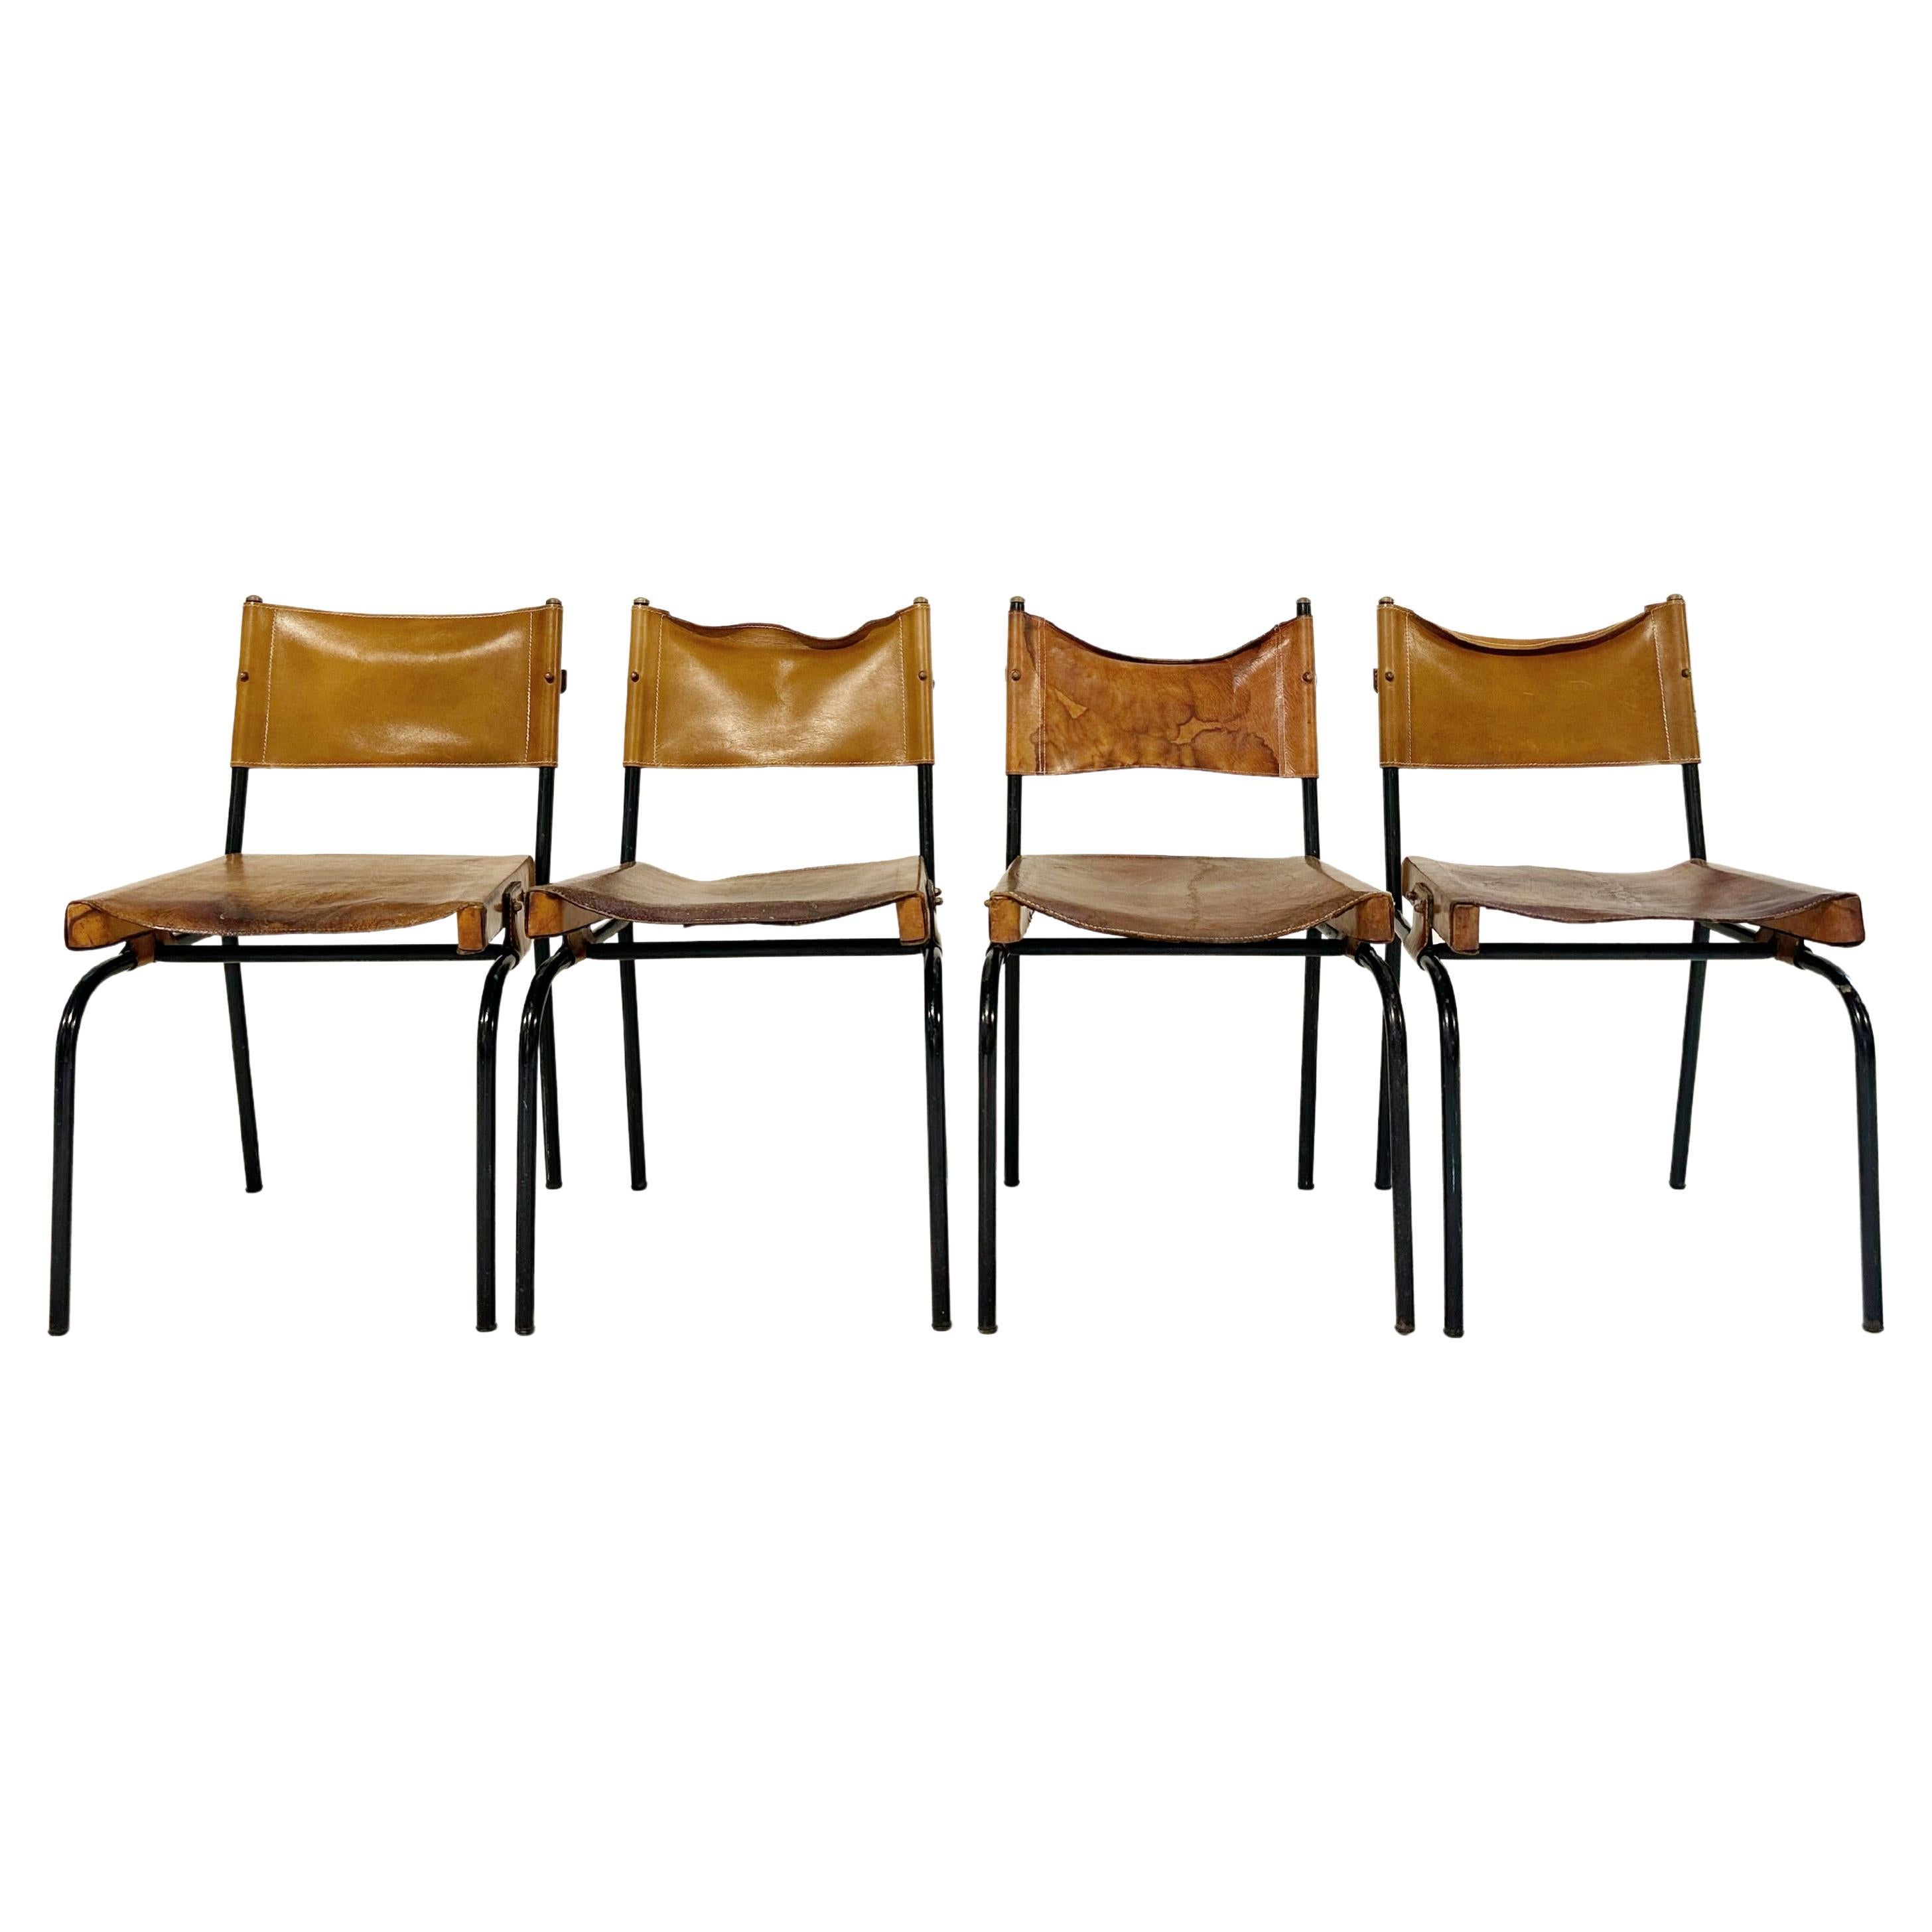 Vintage-Beistellstühle aus Leder von Jacques Adnet, 4er-Set im Angebot